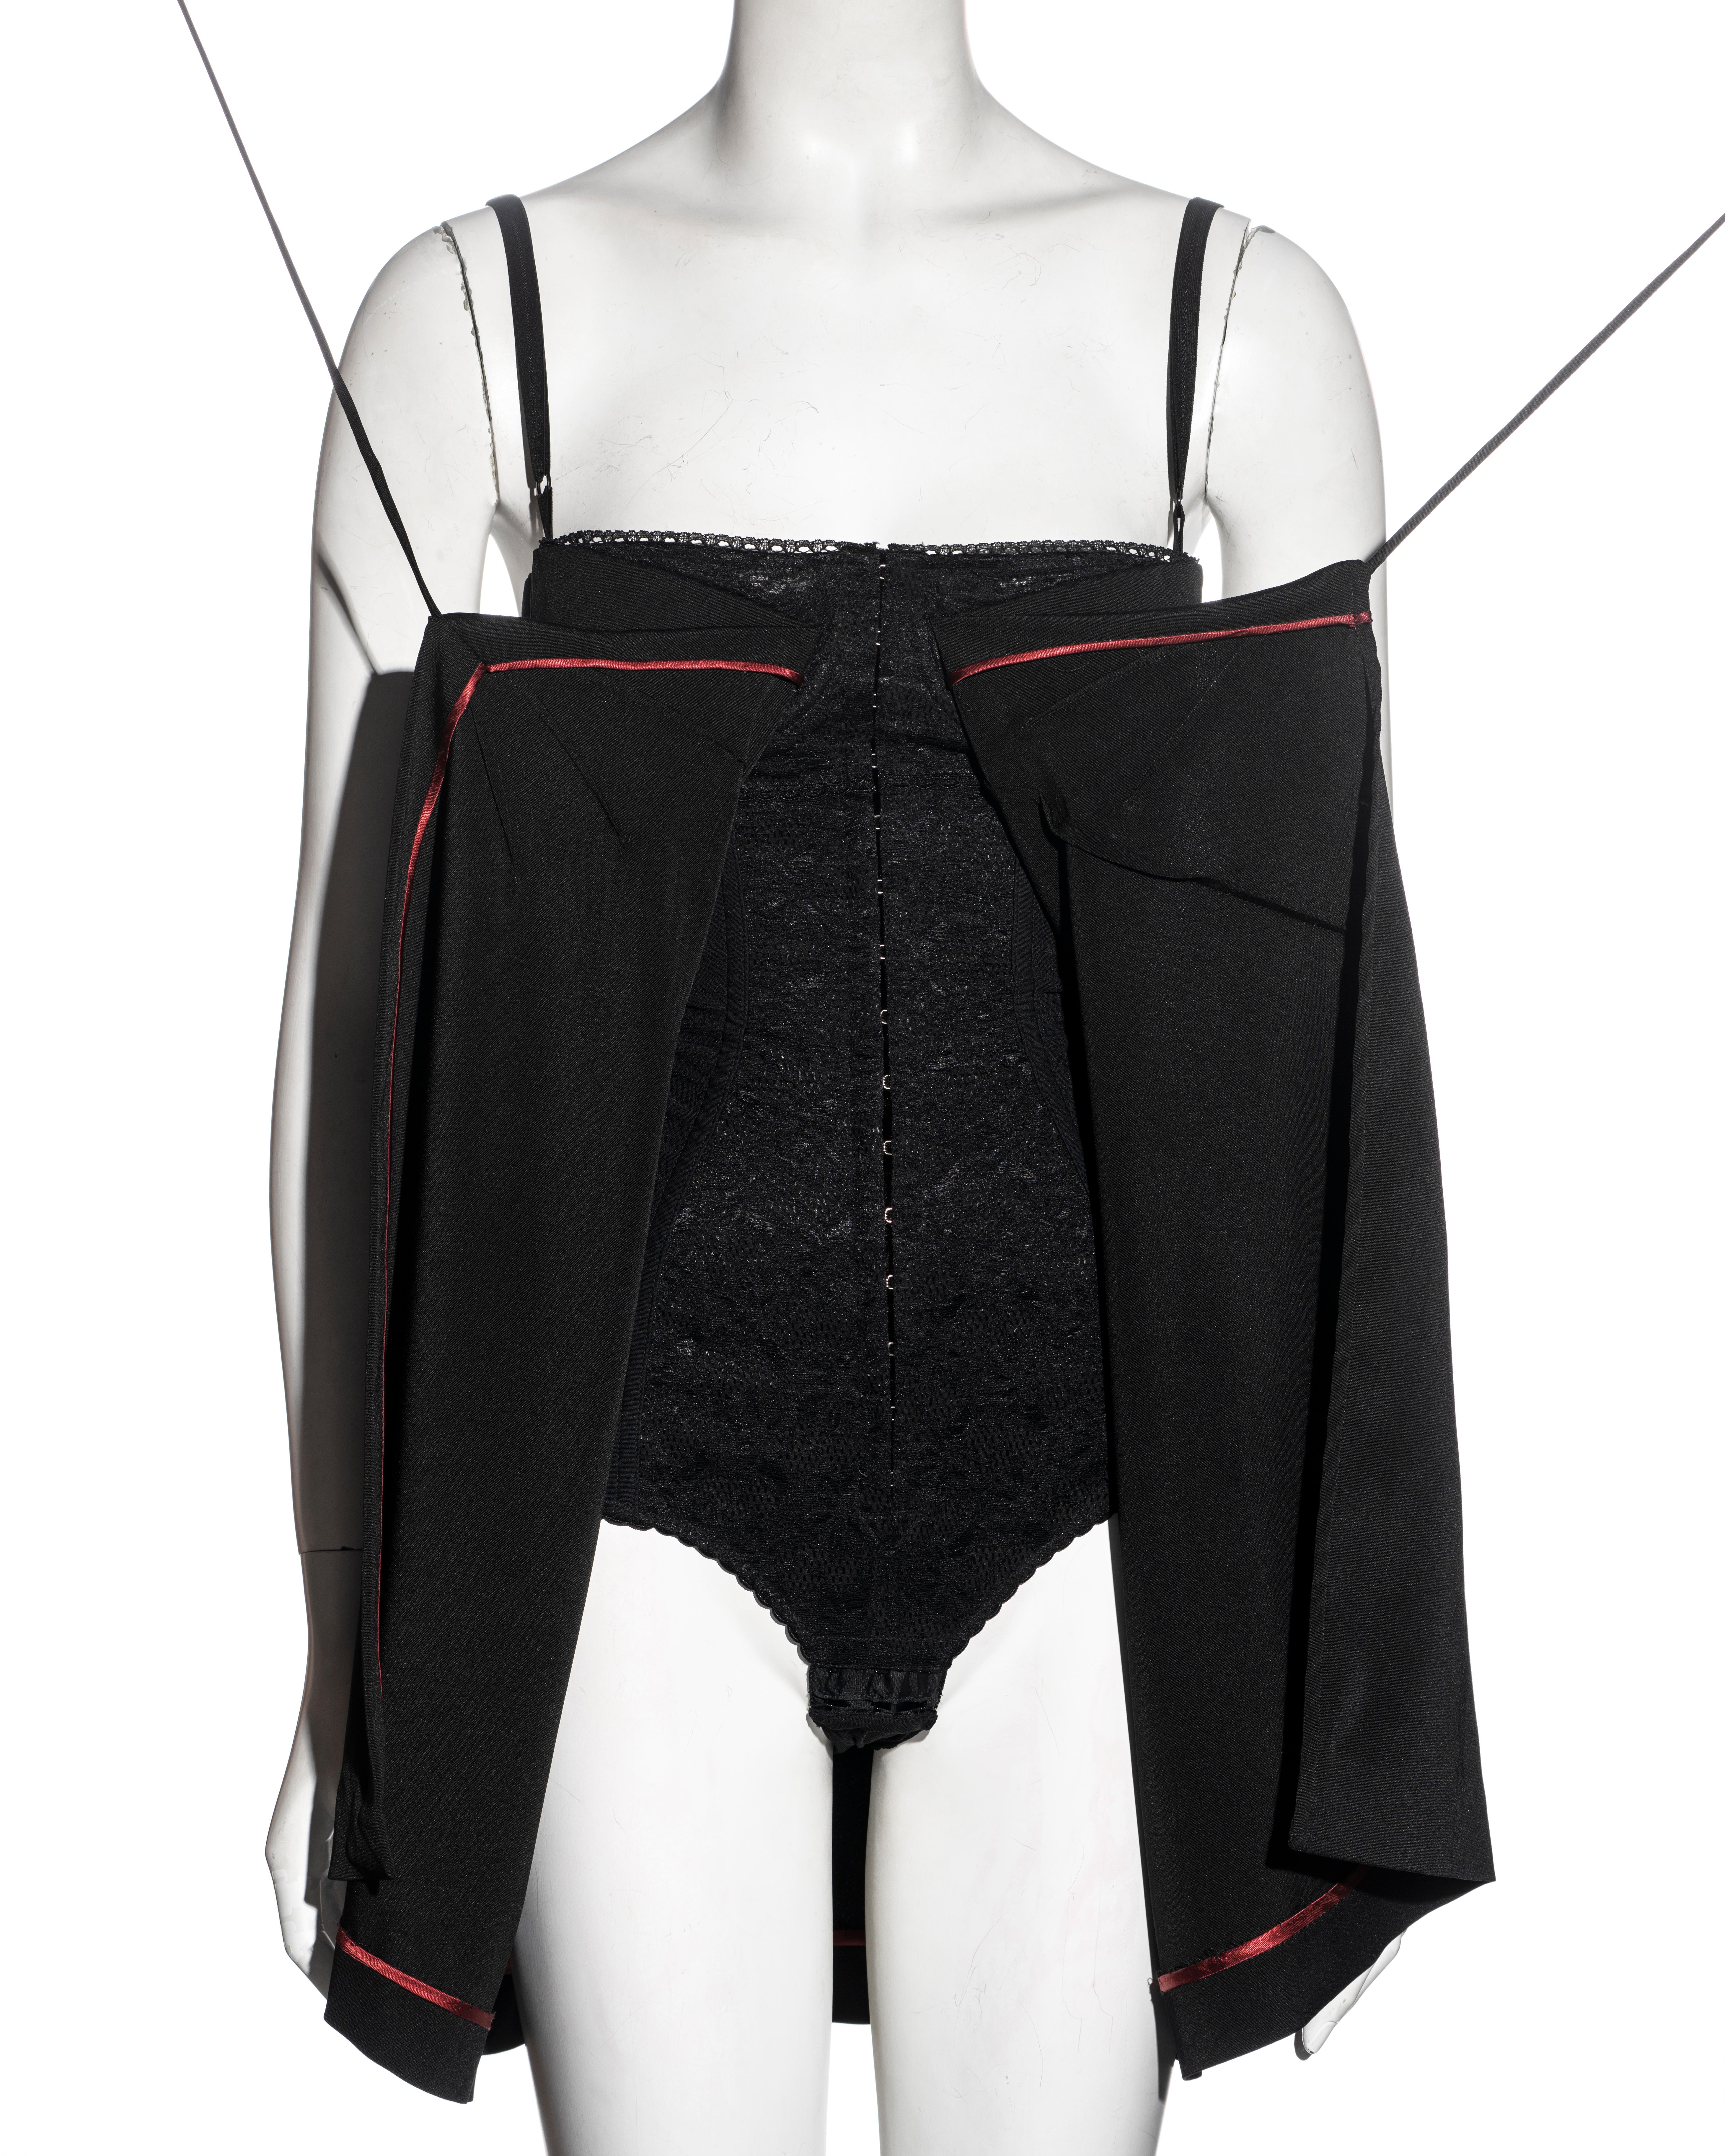 Women's Dolce & Gabbana black mini wrap dress with built in corset bodysuit, fw 1997